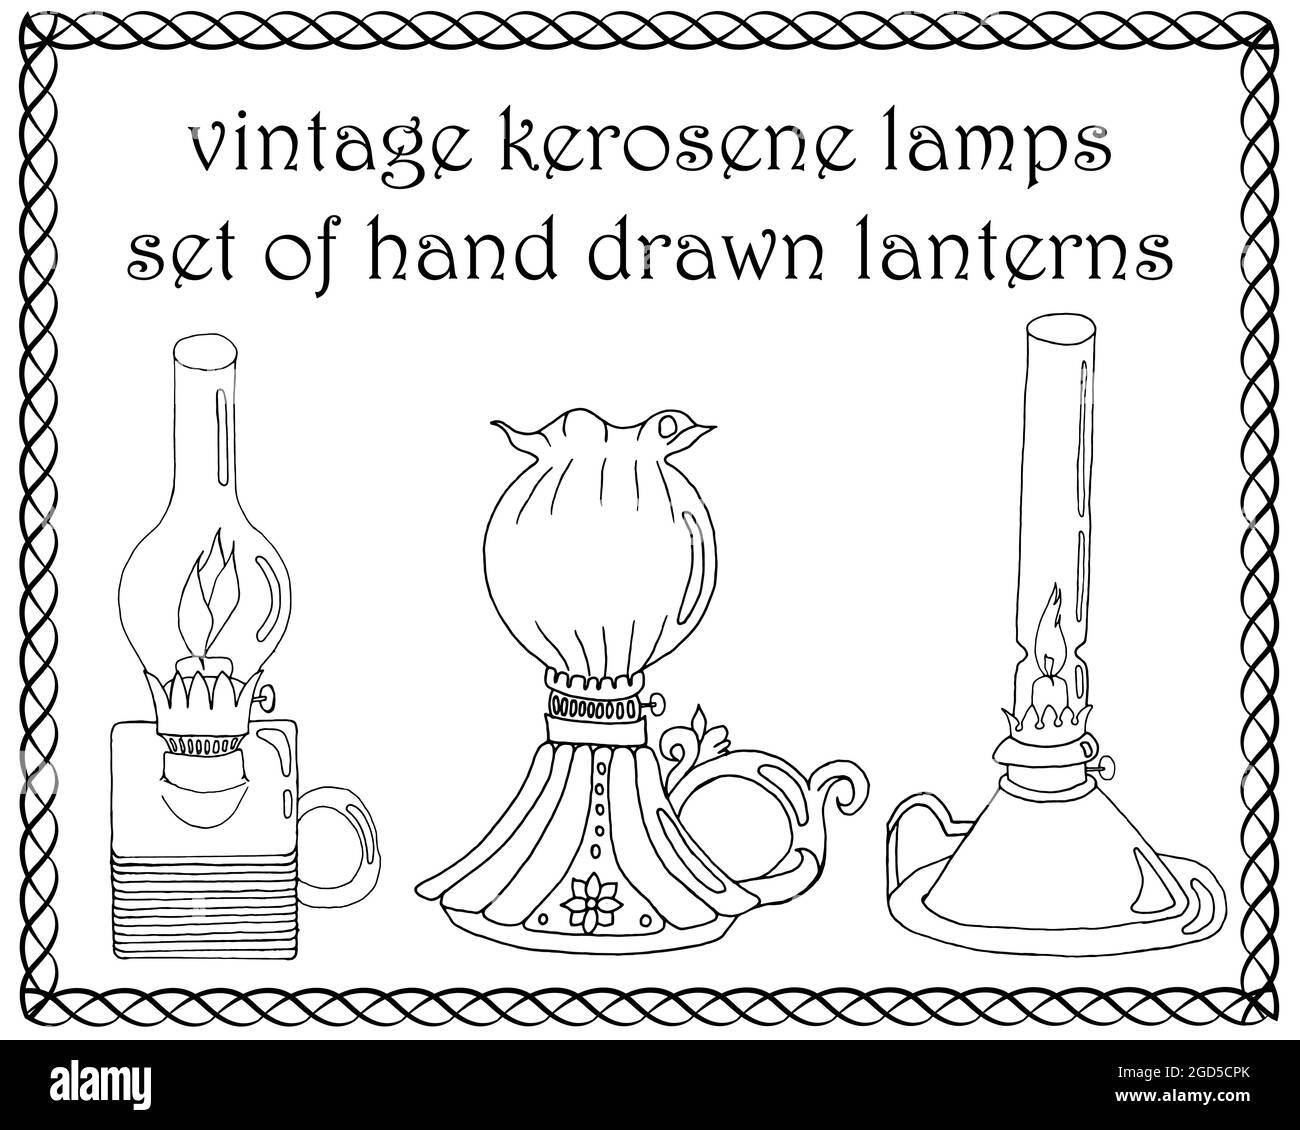 Set of vintage kerosene lamps, hand drawn black and white lanterns Stock Vector